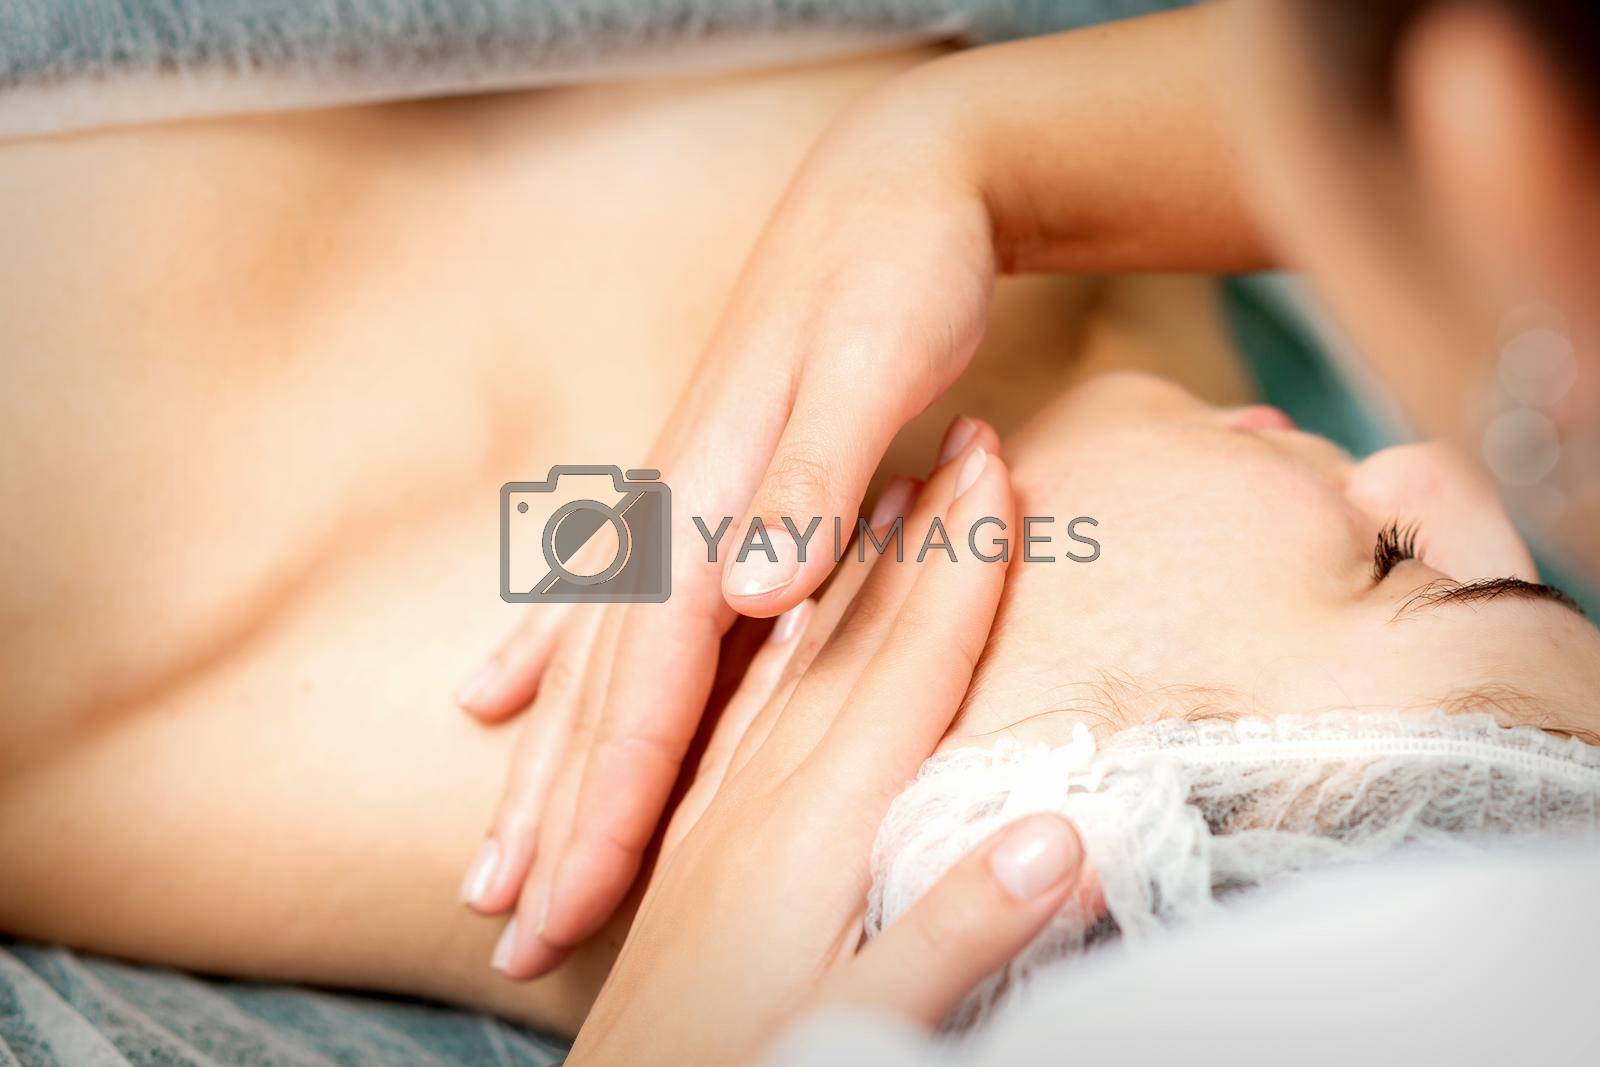 Royalty free image of Young woman receiving facial massage by okskukuruza